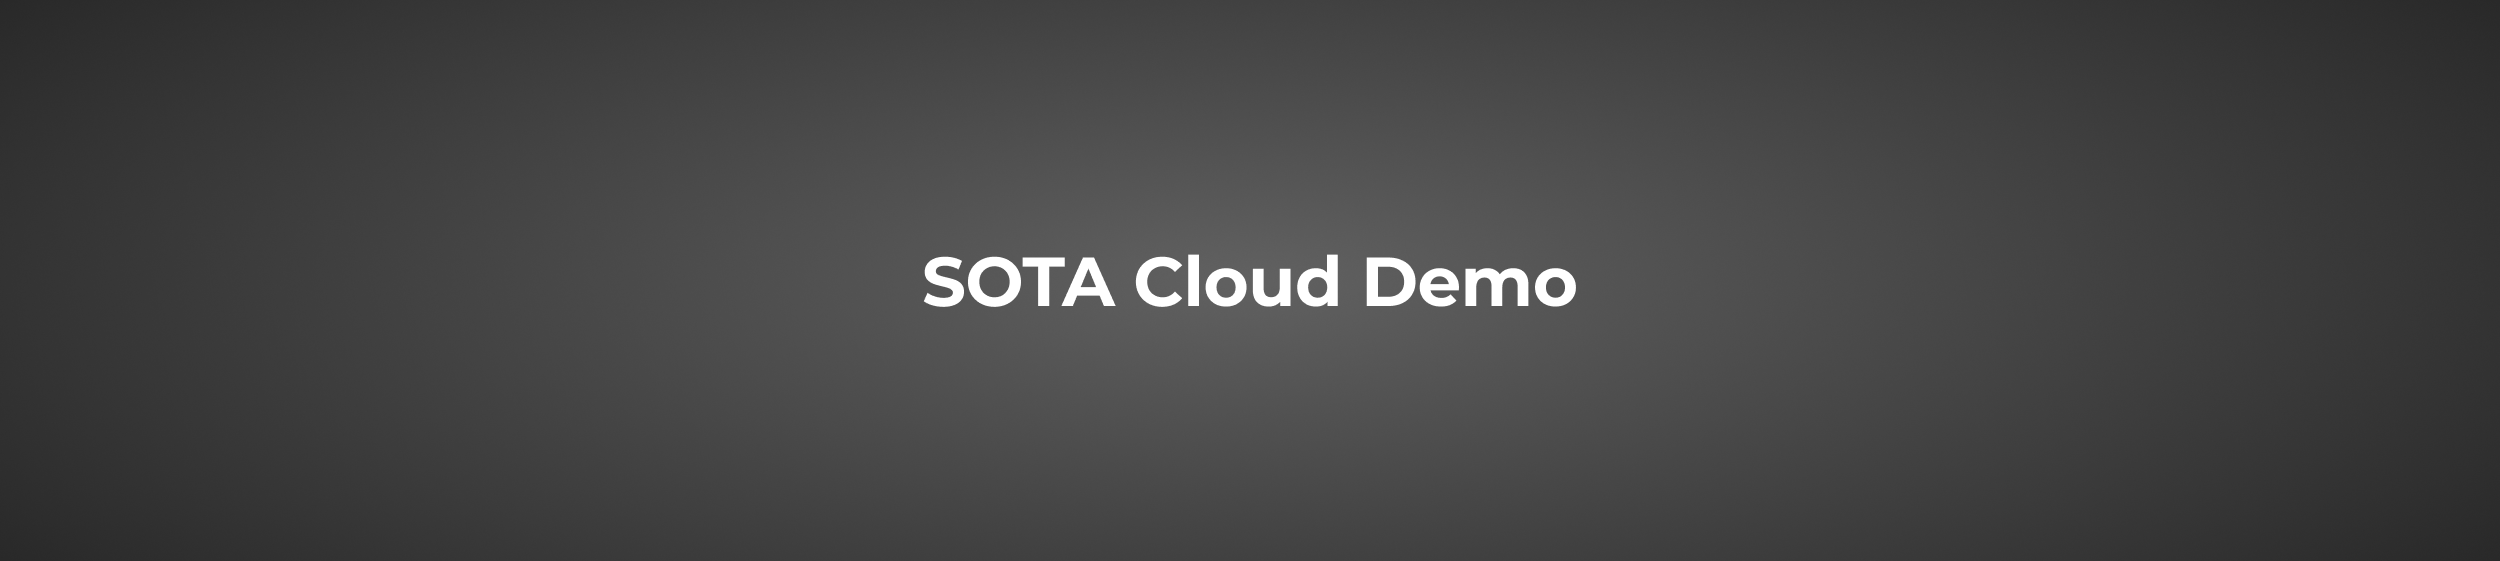 SOTA Cloud Dental Imaging Software Demo